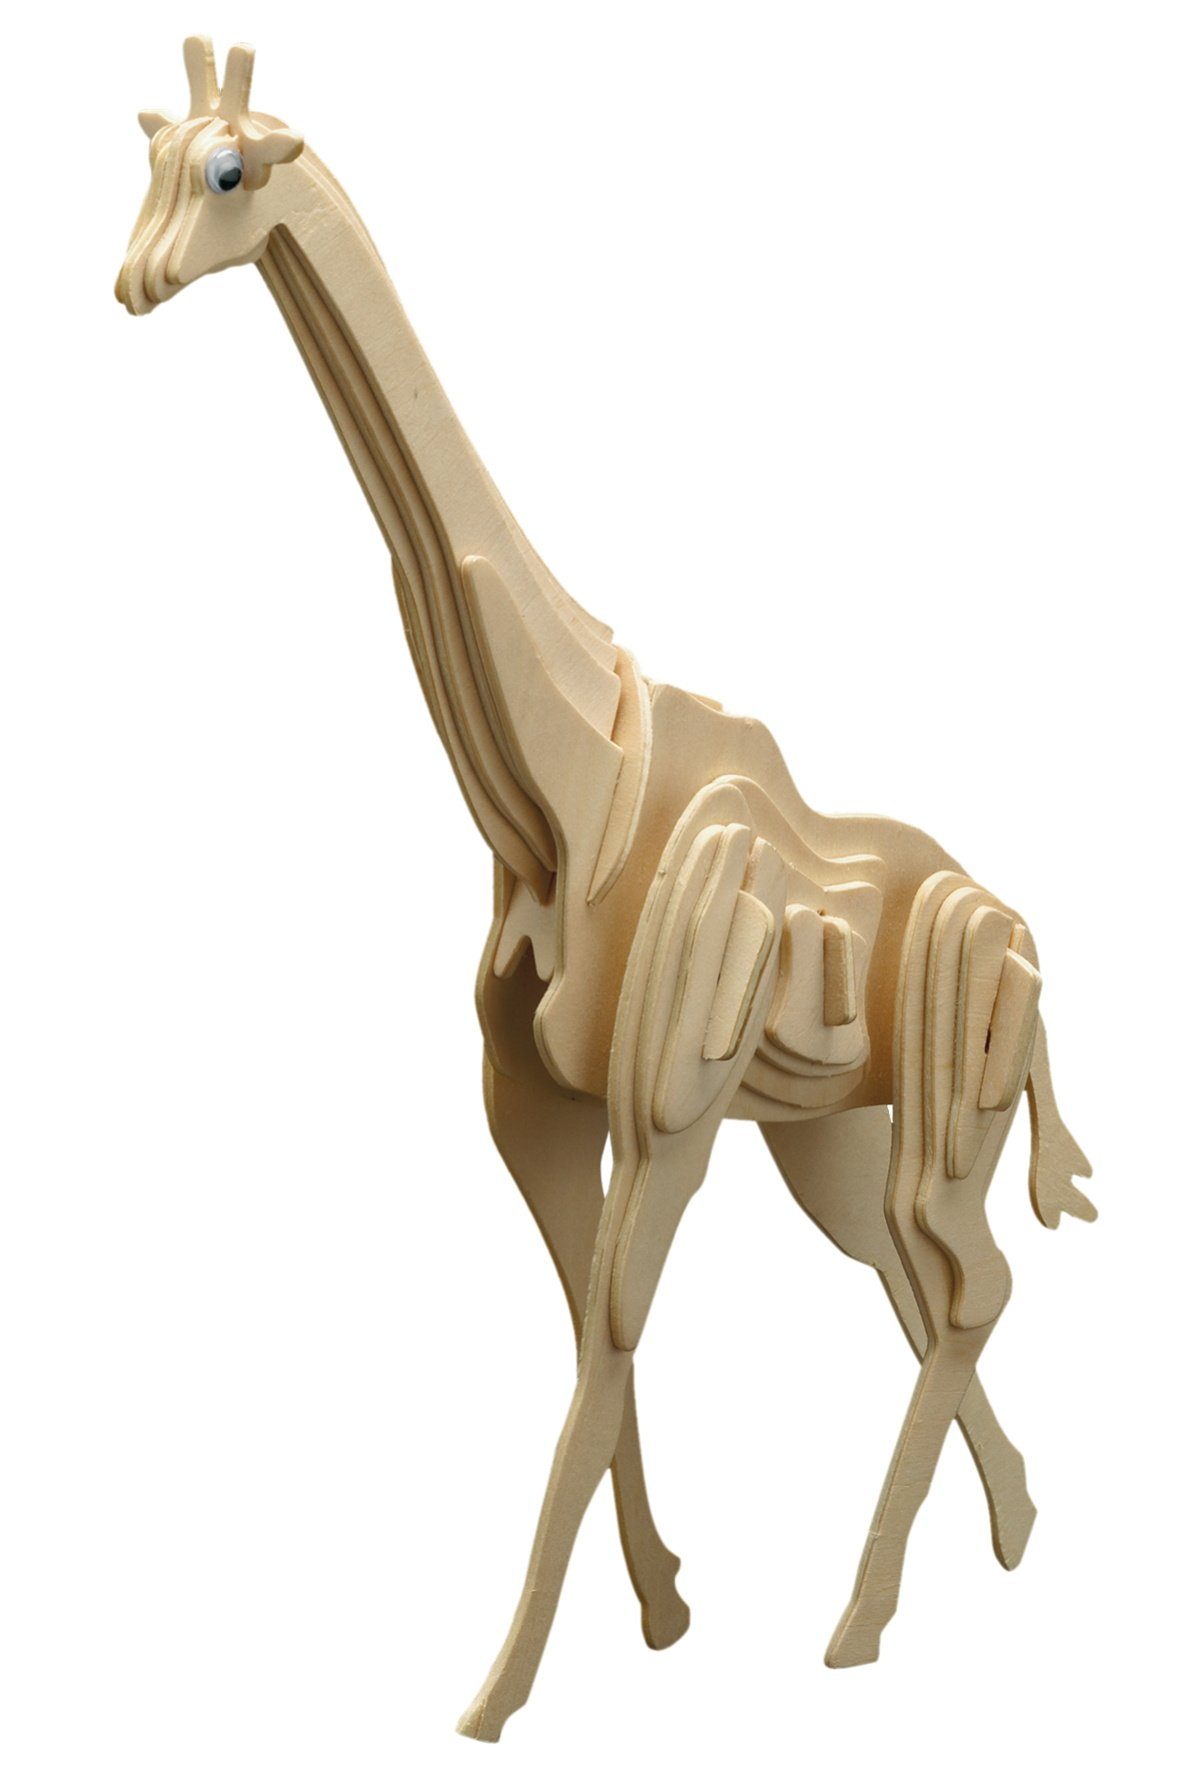 Pebaro 3D-Puzzle Holzbausatz Giraffe, 859/4, 38 Puzzleteile